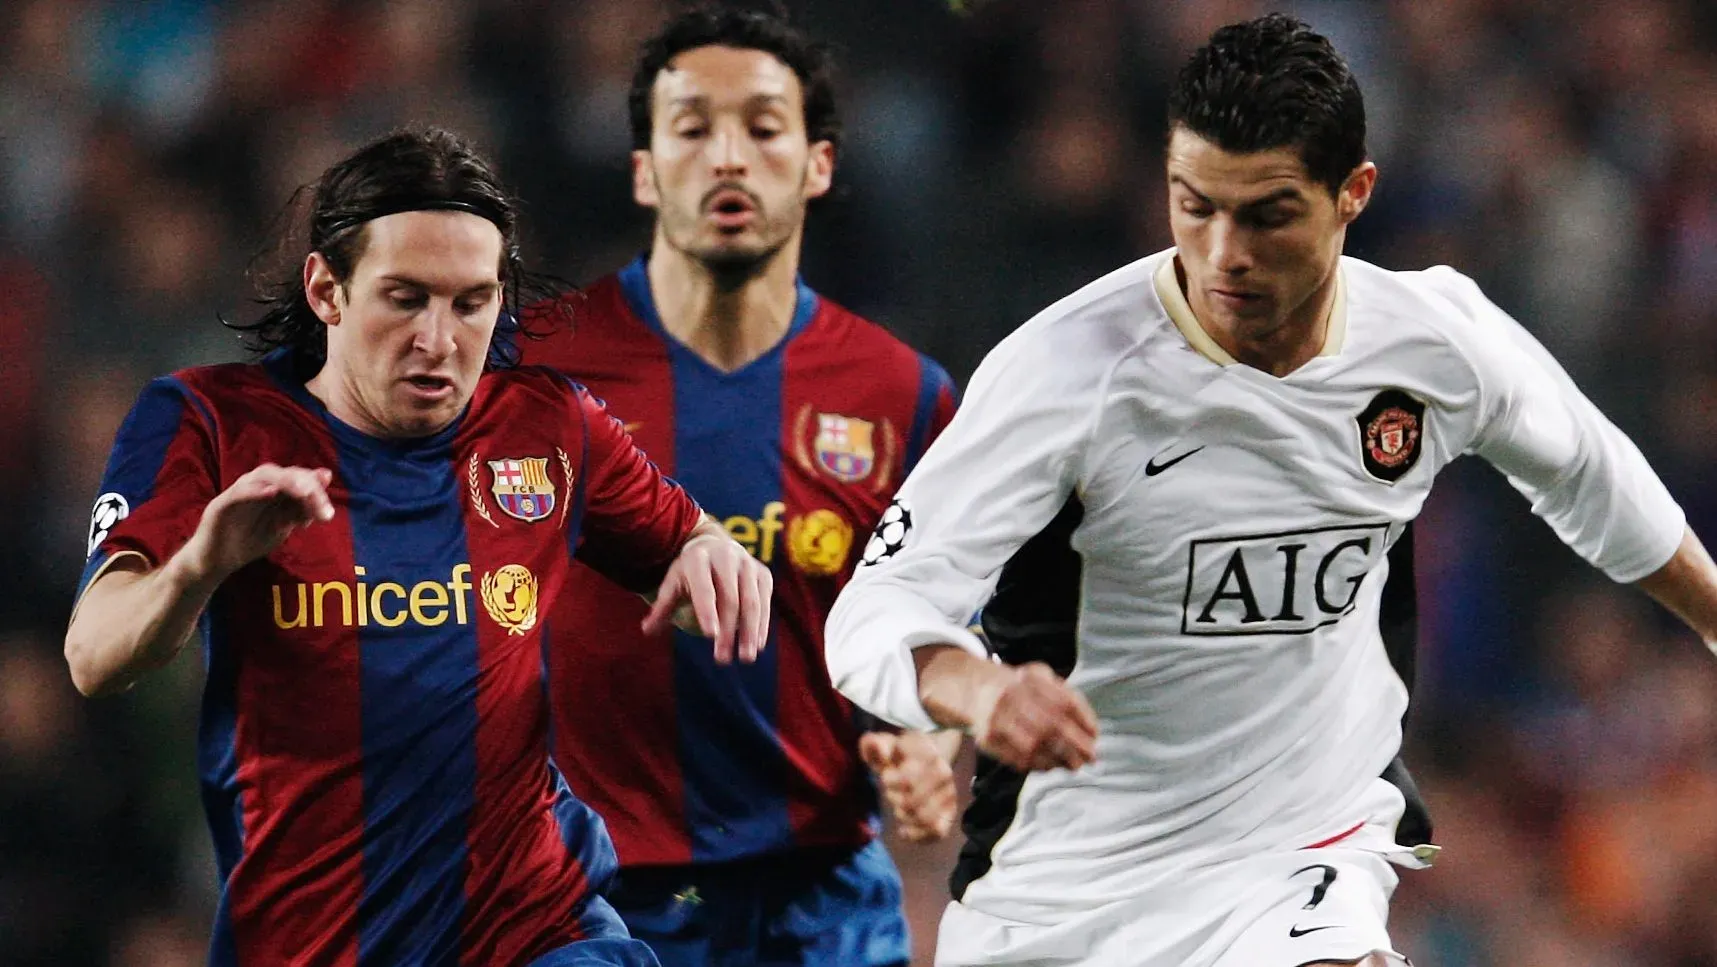 Lionel Messi vs. Cristiano Ronaldo en un duelo por Champions League en 2008. Getty Images.